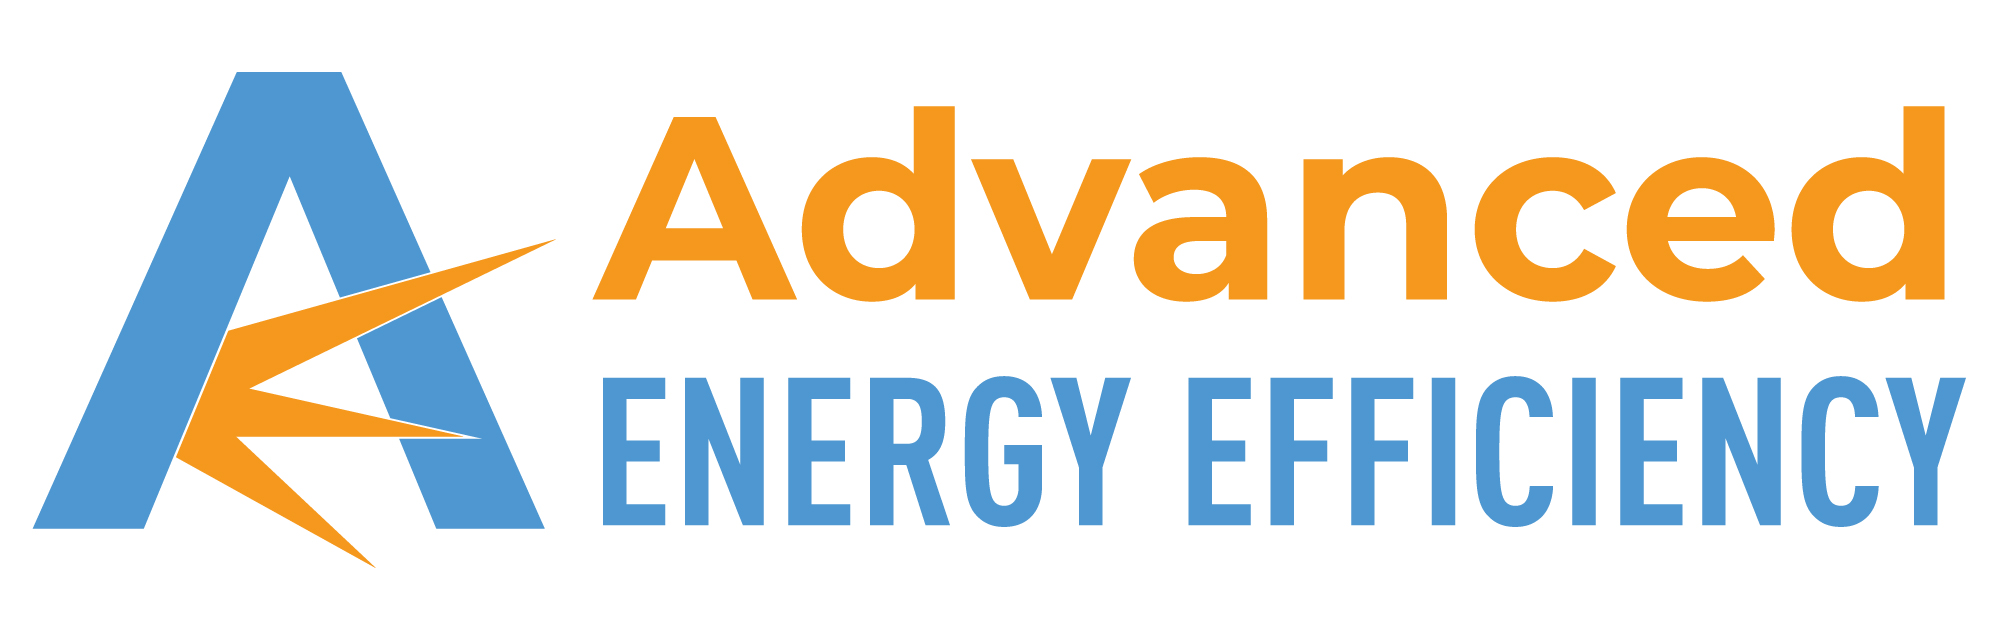 Advanced Energy Efficiency